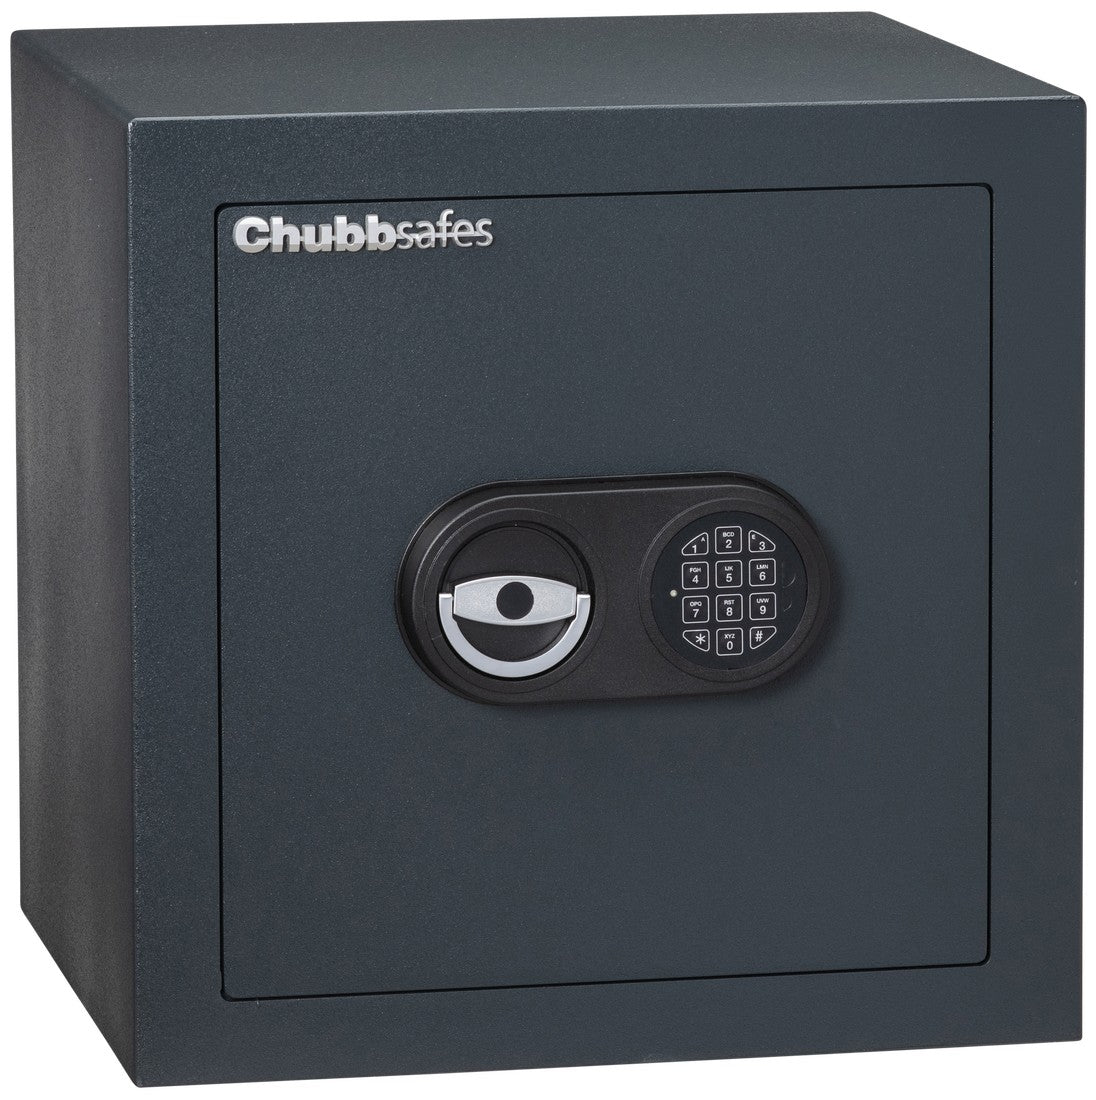 Chubbsafes ZETA Eurograde 0 Safe 40E Size Medium DIGITAL LOCK